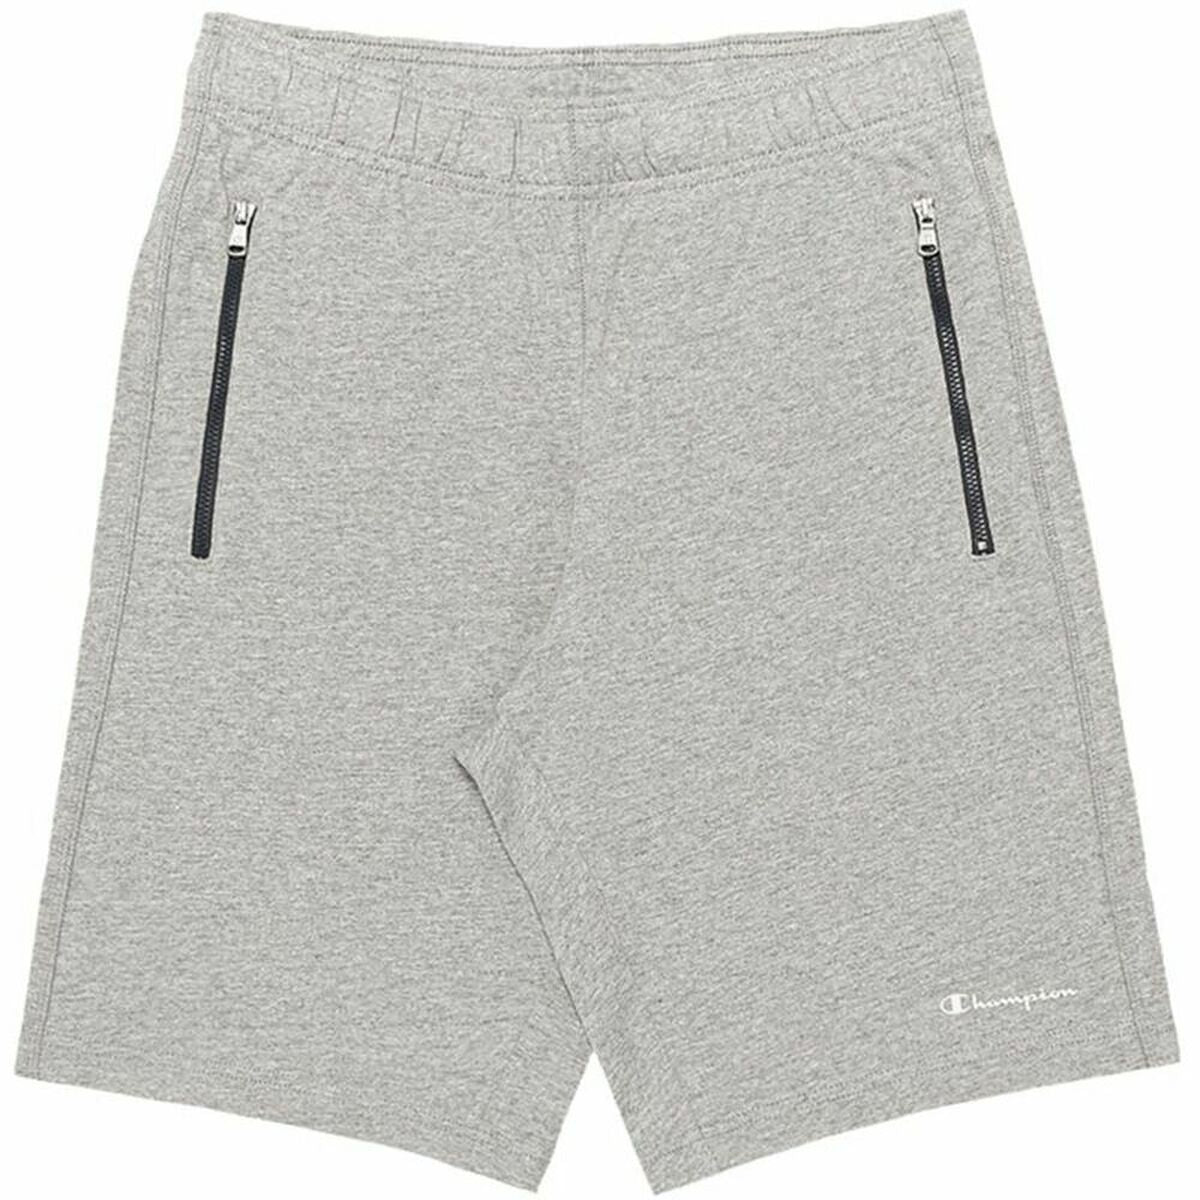 Light Grey Men's Champion Athletic Shorts